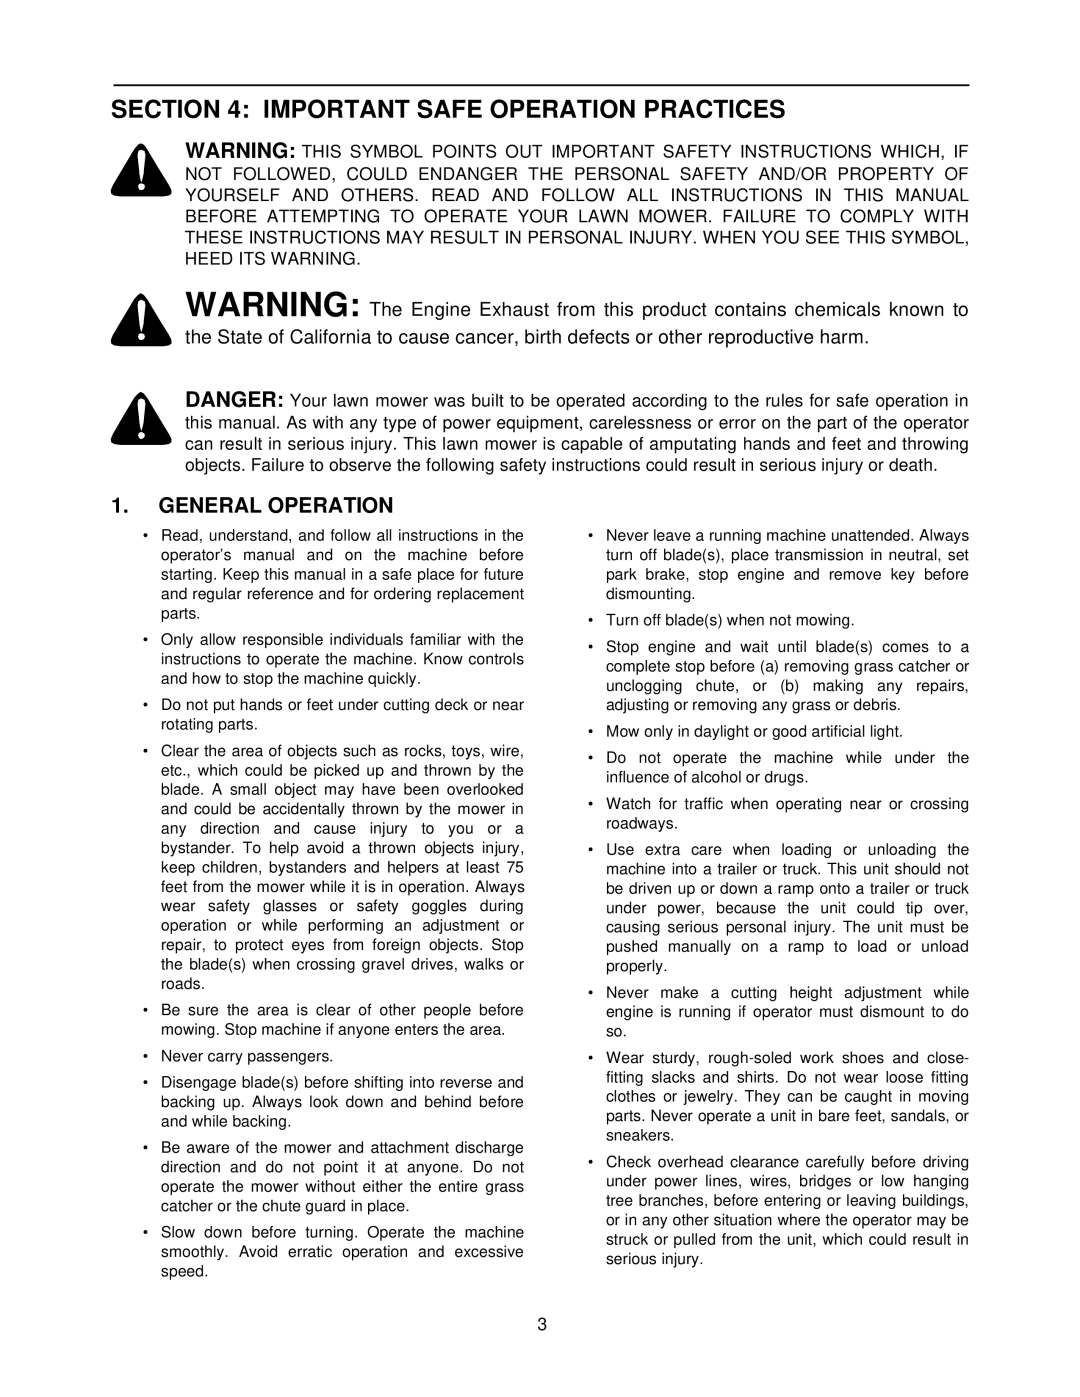 Troy-Bilt 604 manual Important Safe Operation Practices, General Operation 